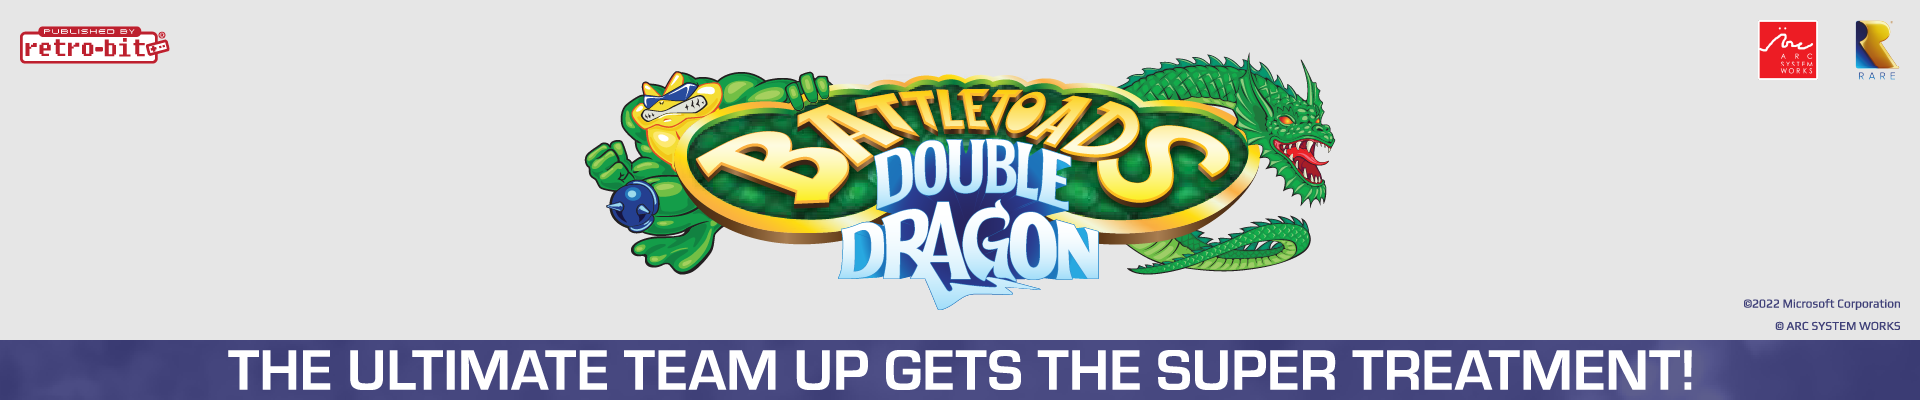 Battletoads & Double Dragon SNES - Header